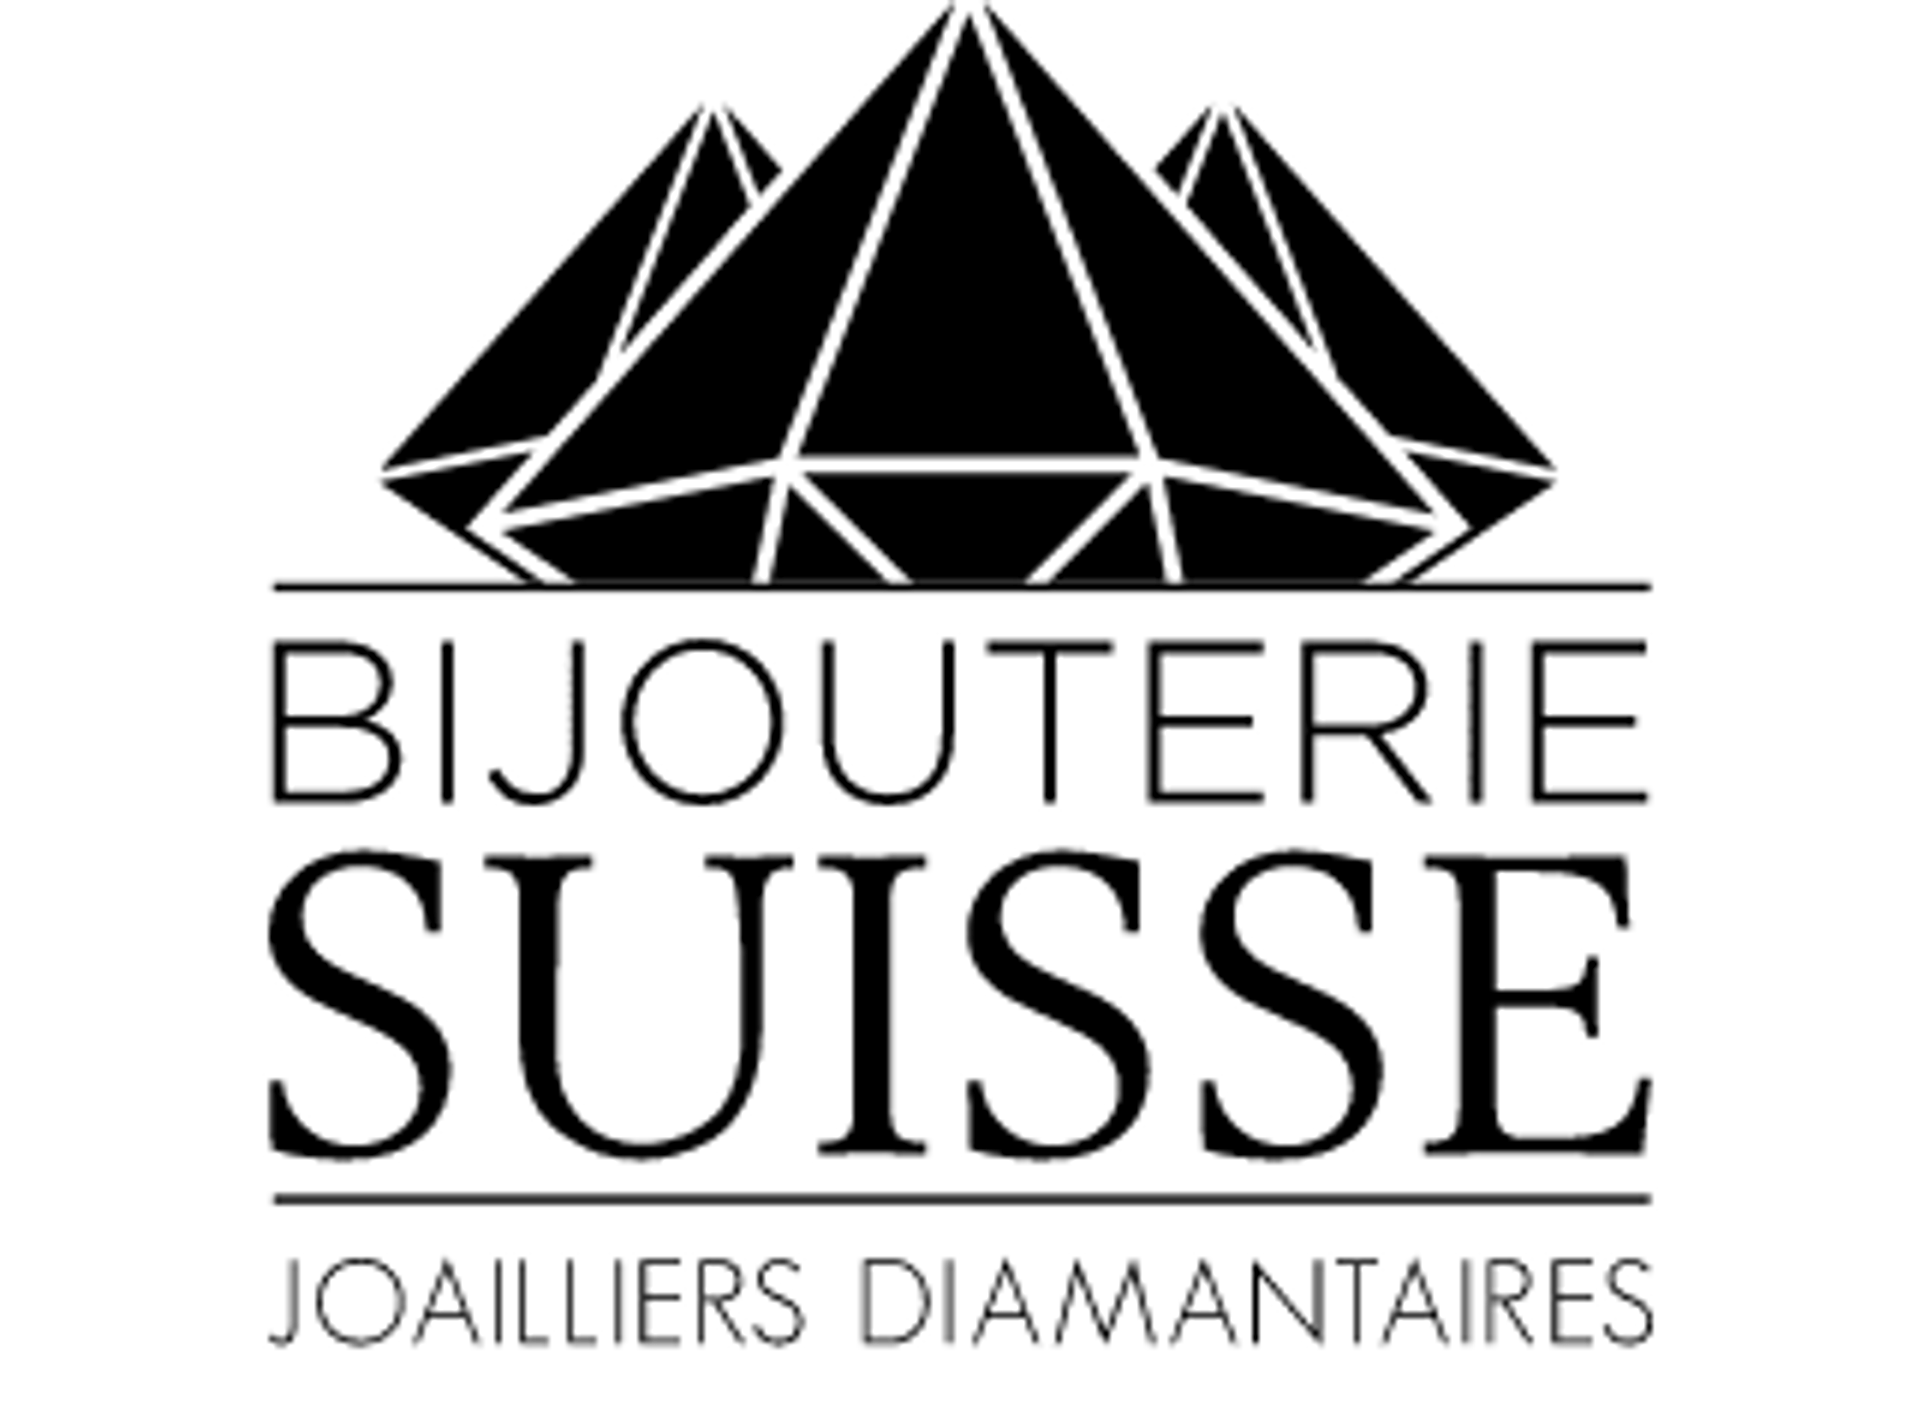 Bijouterie Suisse logo de circulaires